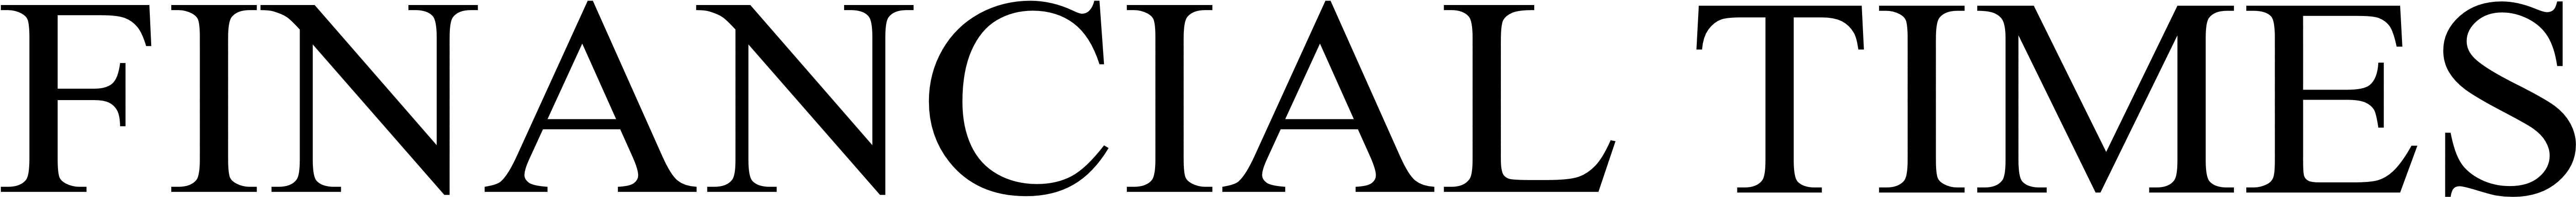 Financial Times Black And White Logo (5724x615)